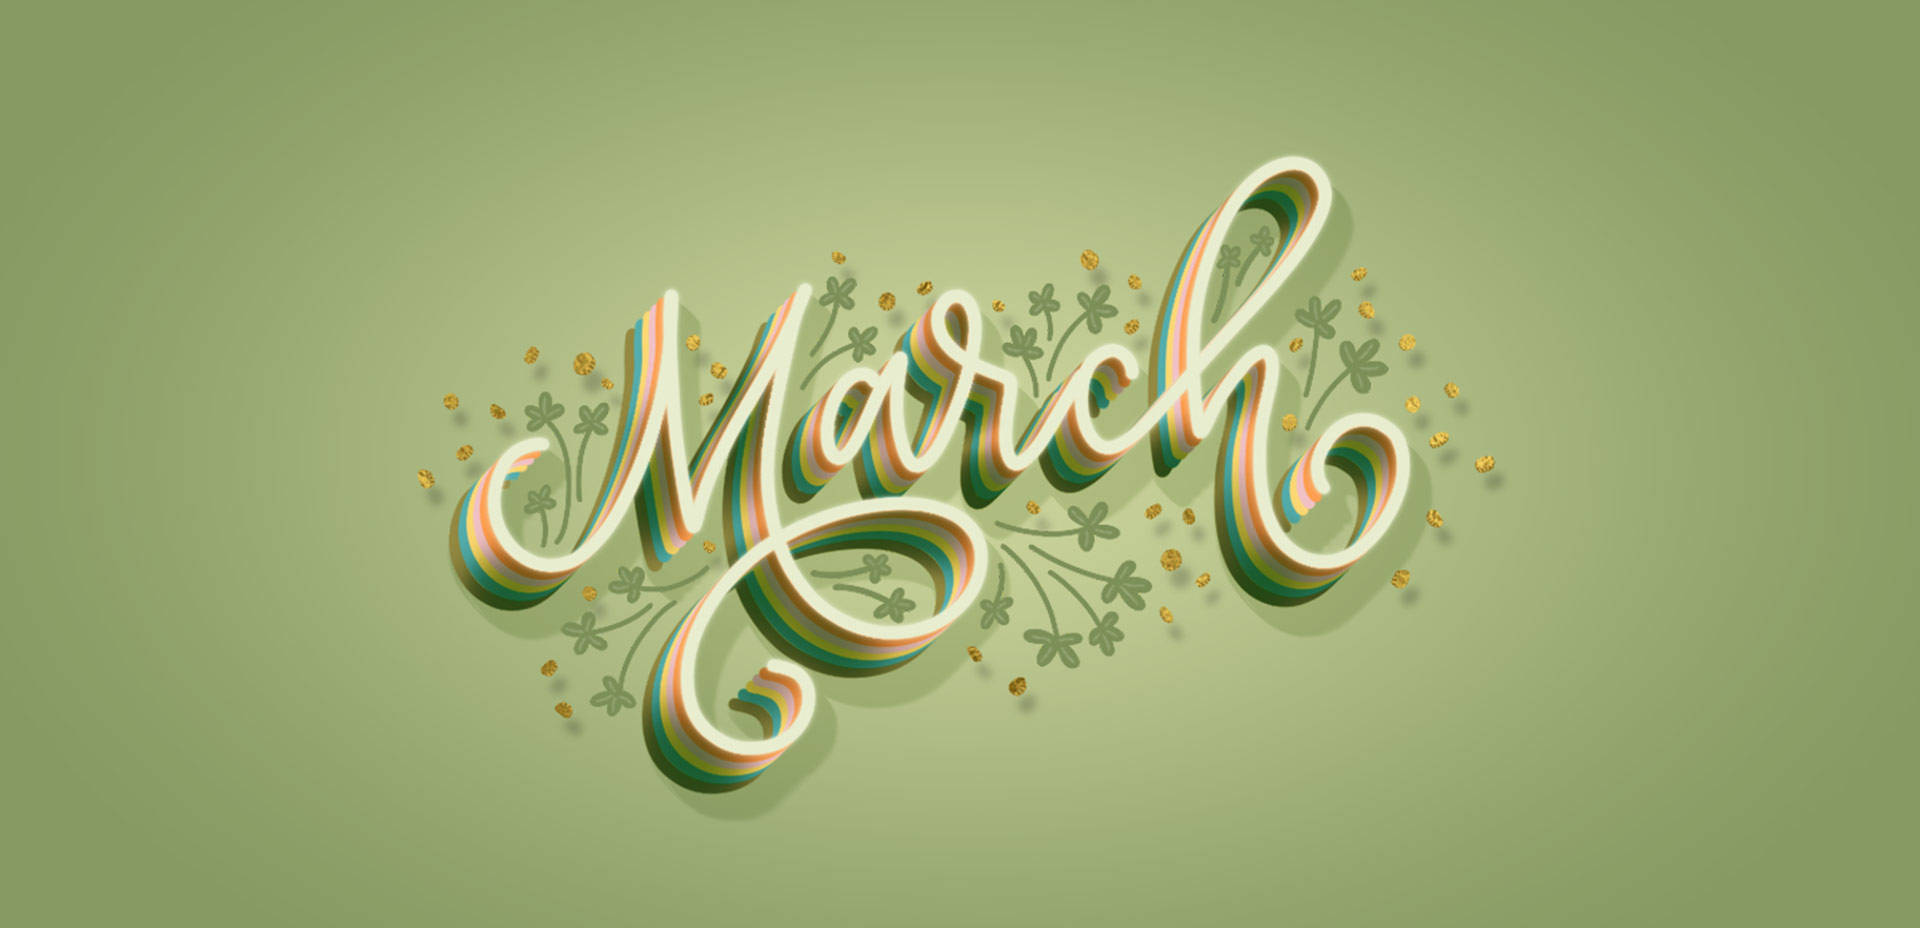 March Digital Lettering Background